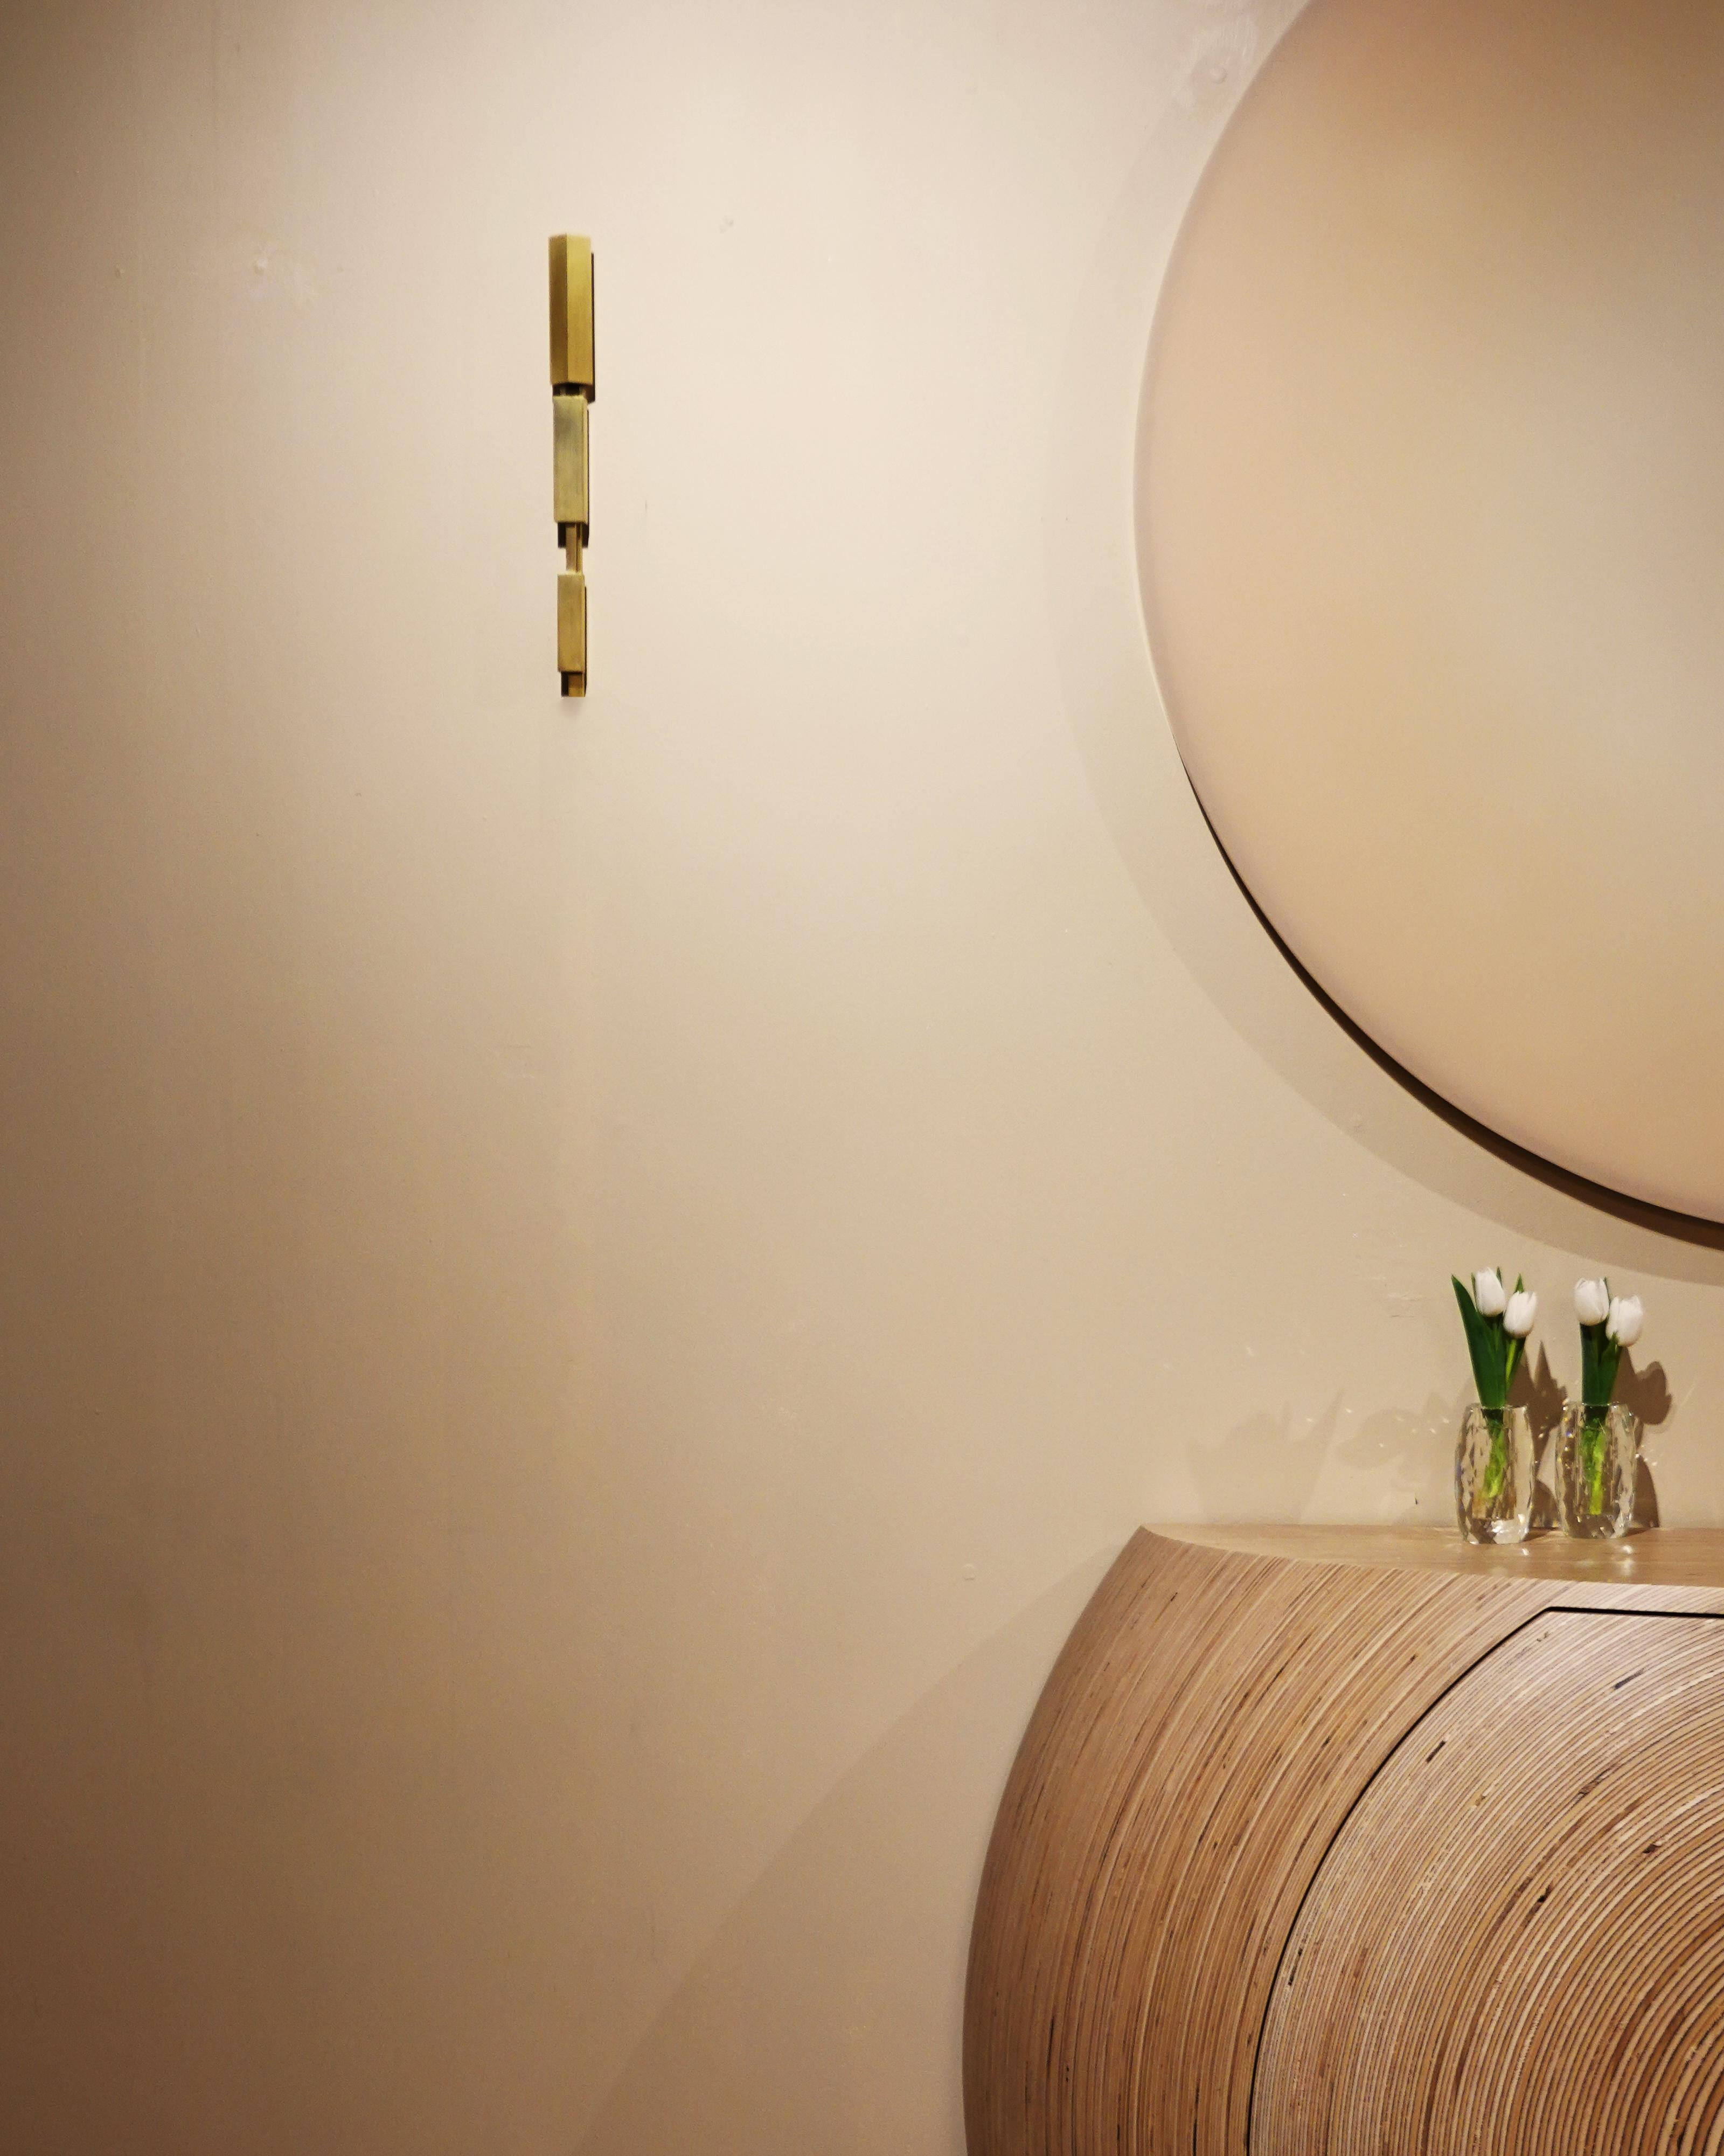 Italian Tetra Ray - Solid Brass Wall Light Handmade by Diaphan Studio For Sale